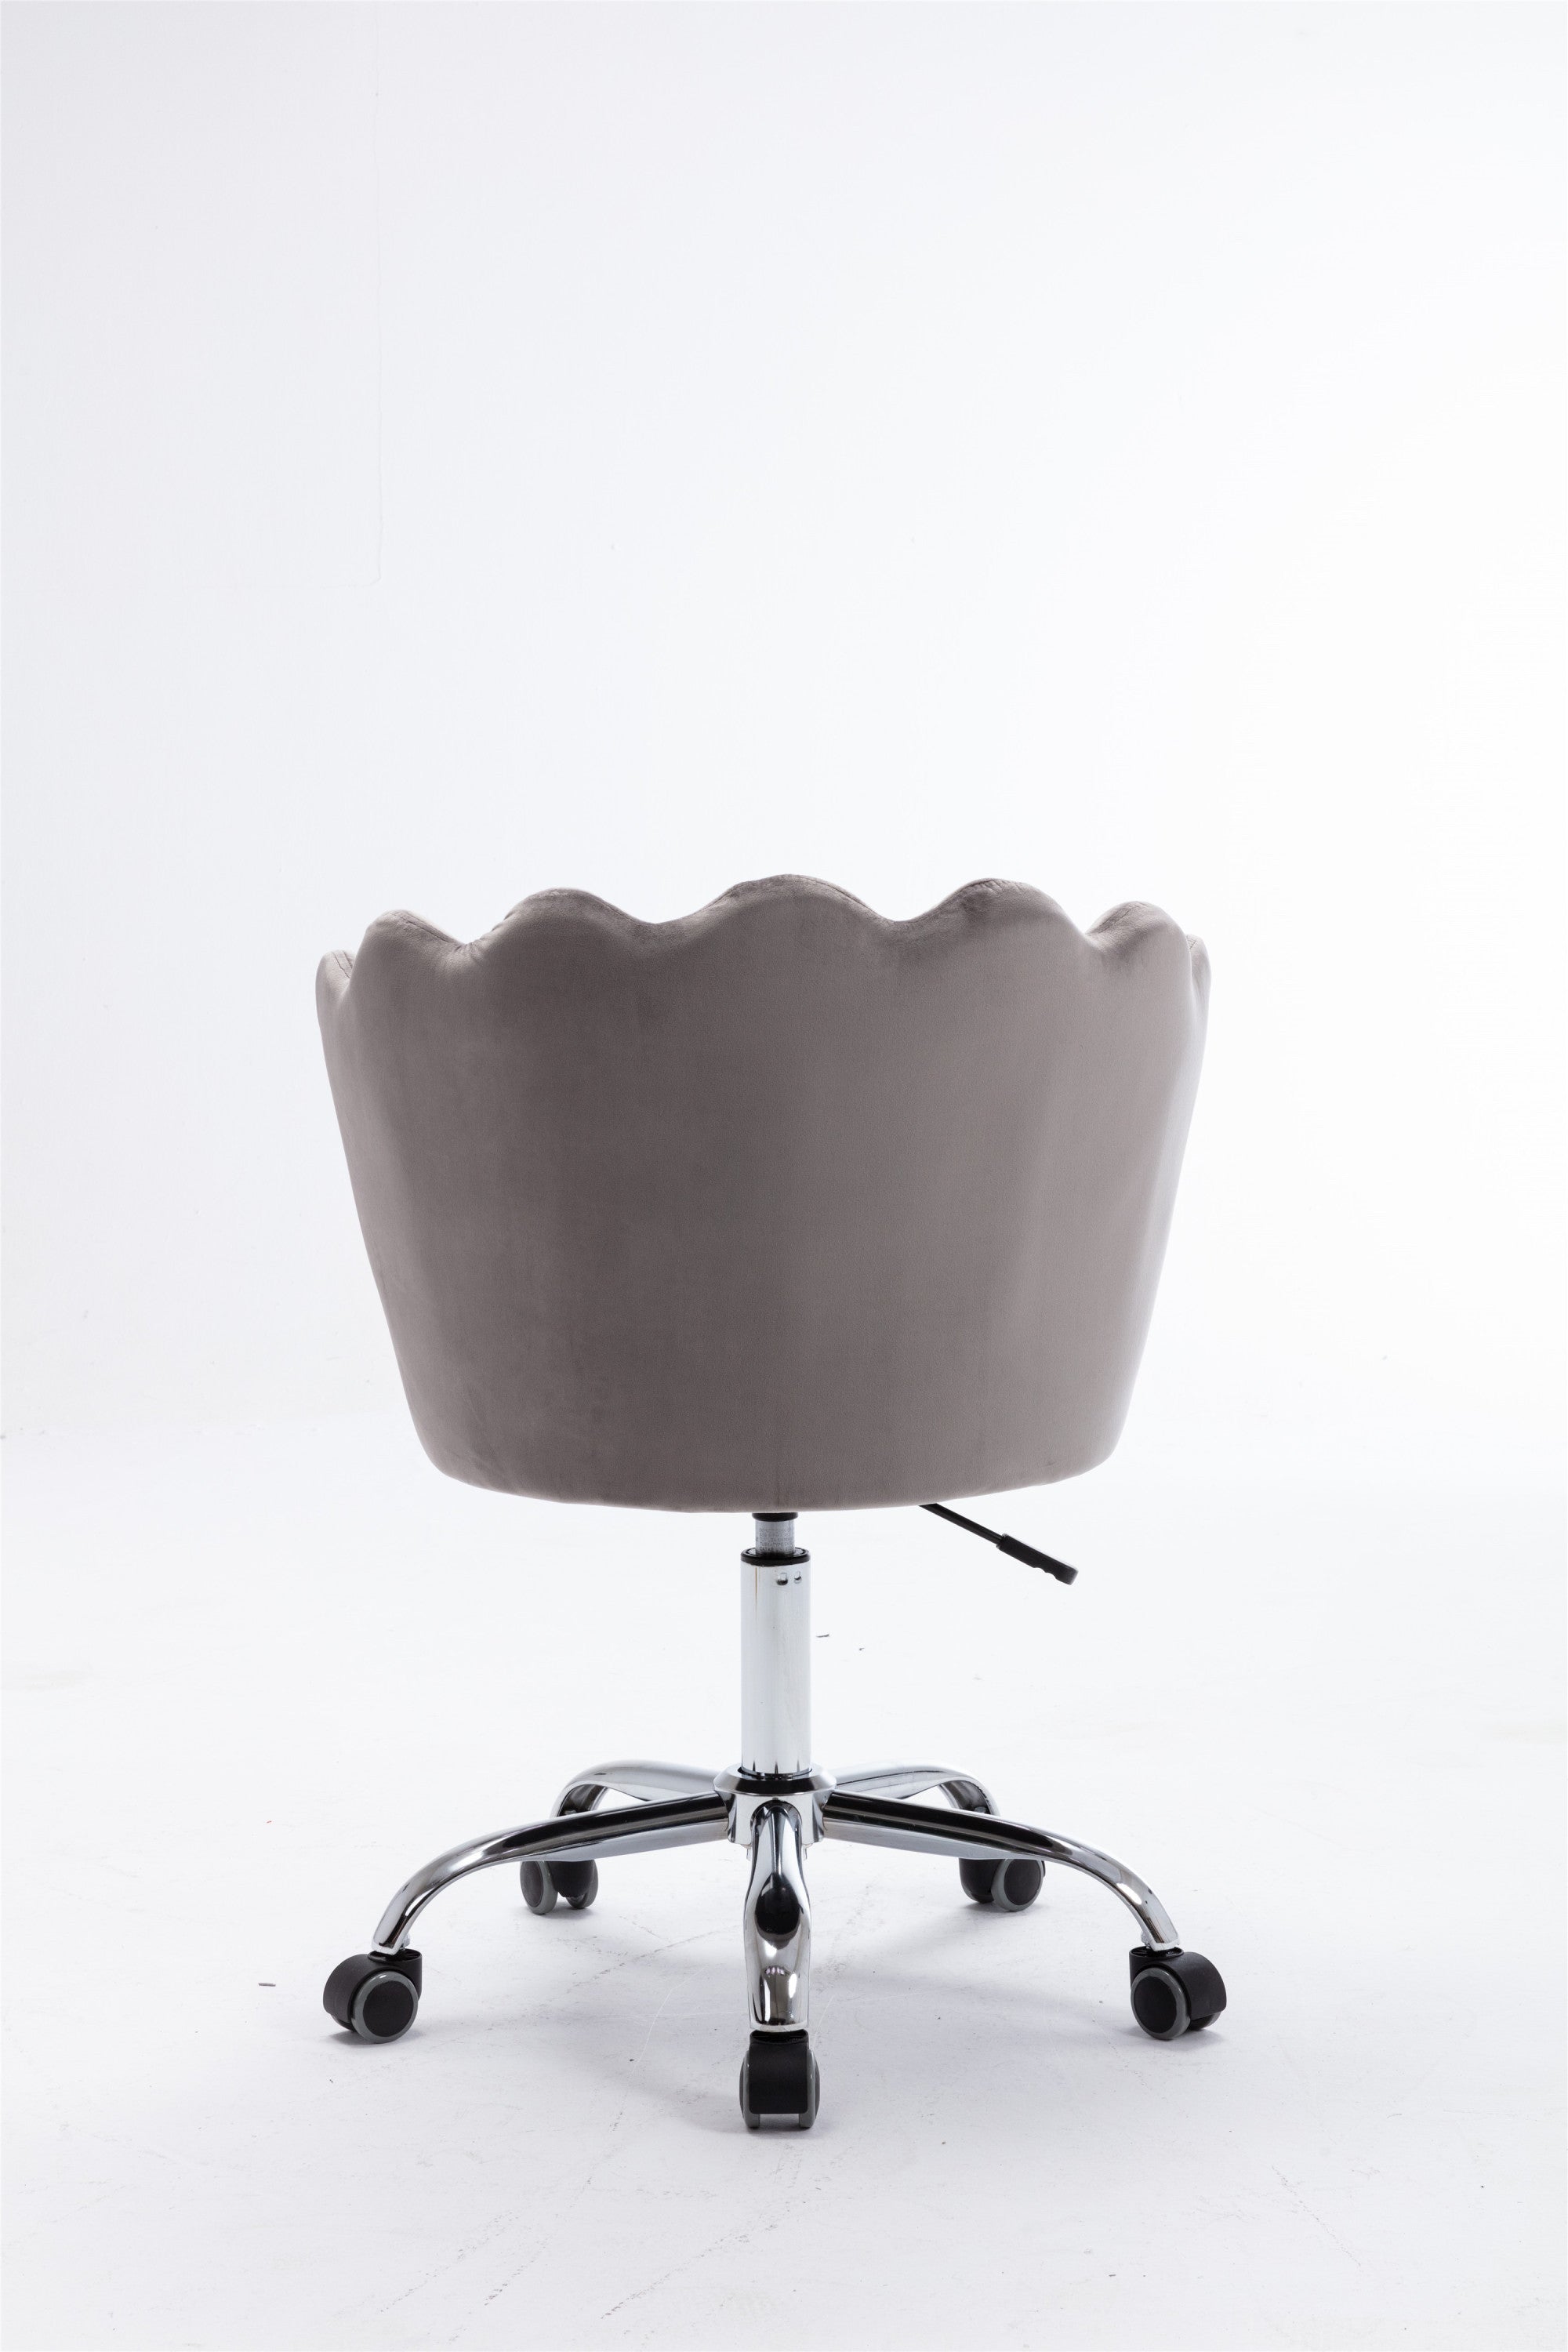 NOBLEMOOD Velvet Home Office Chair, Modern Adjustable Swivel Shell Desk Chair for Living Room Upholstered Cute Vanity Chair with Wheels, Comfy Task Chair Accent Chair for Living Room